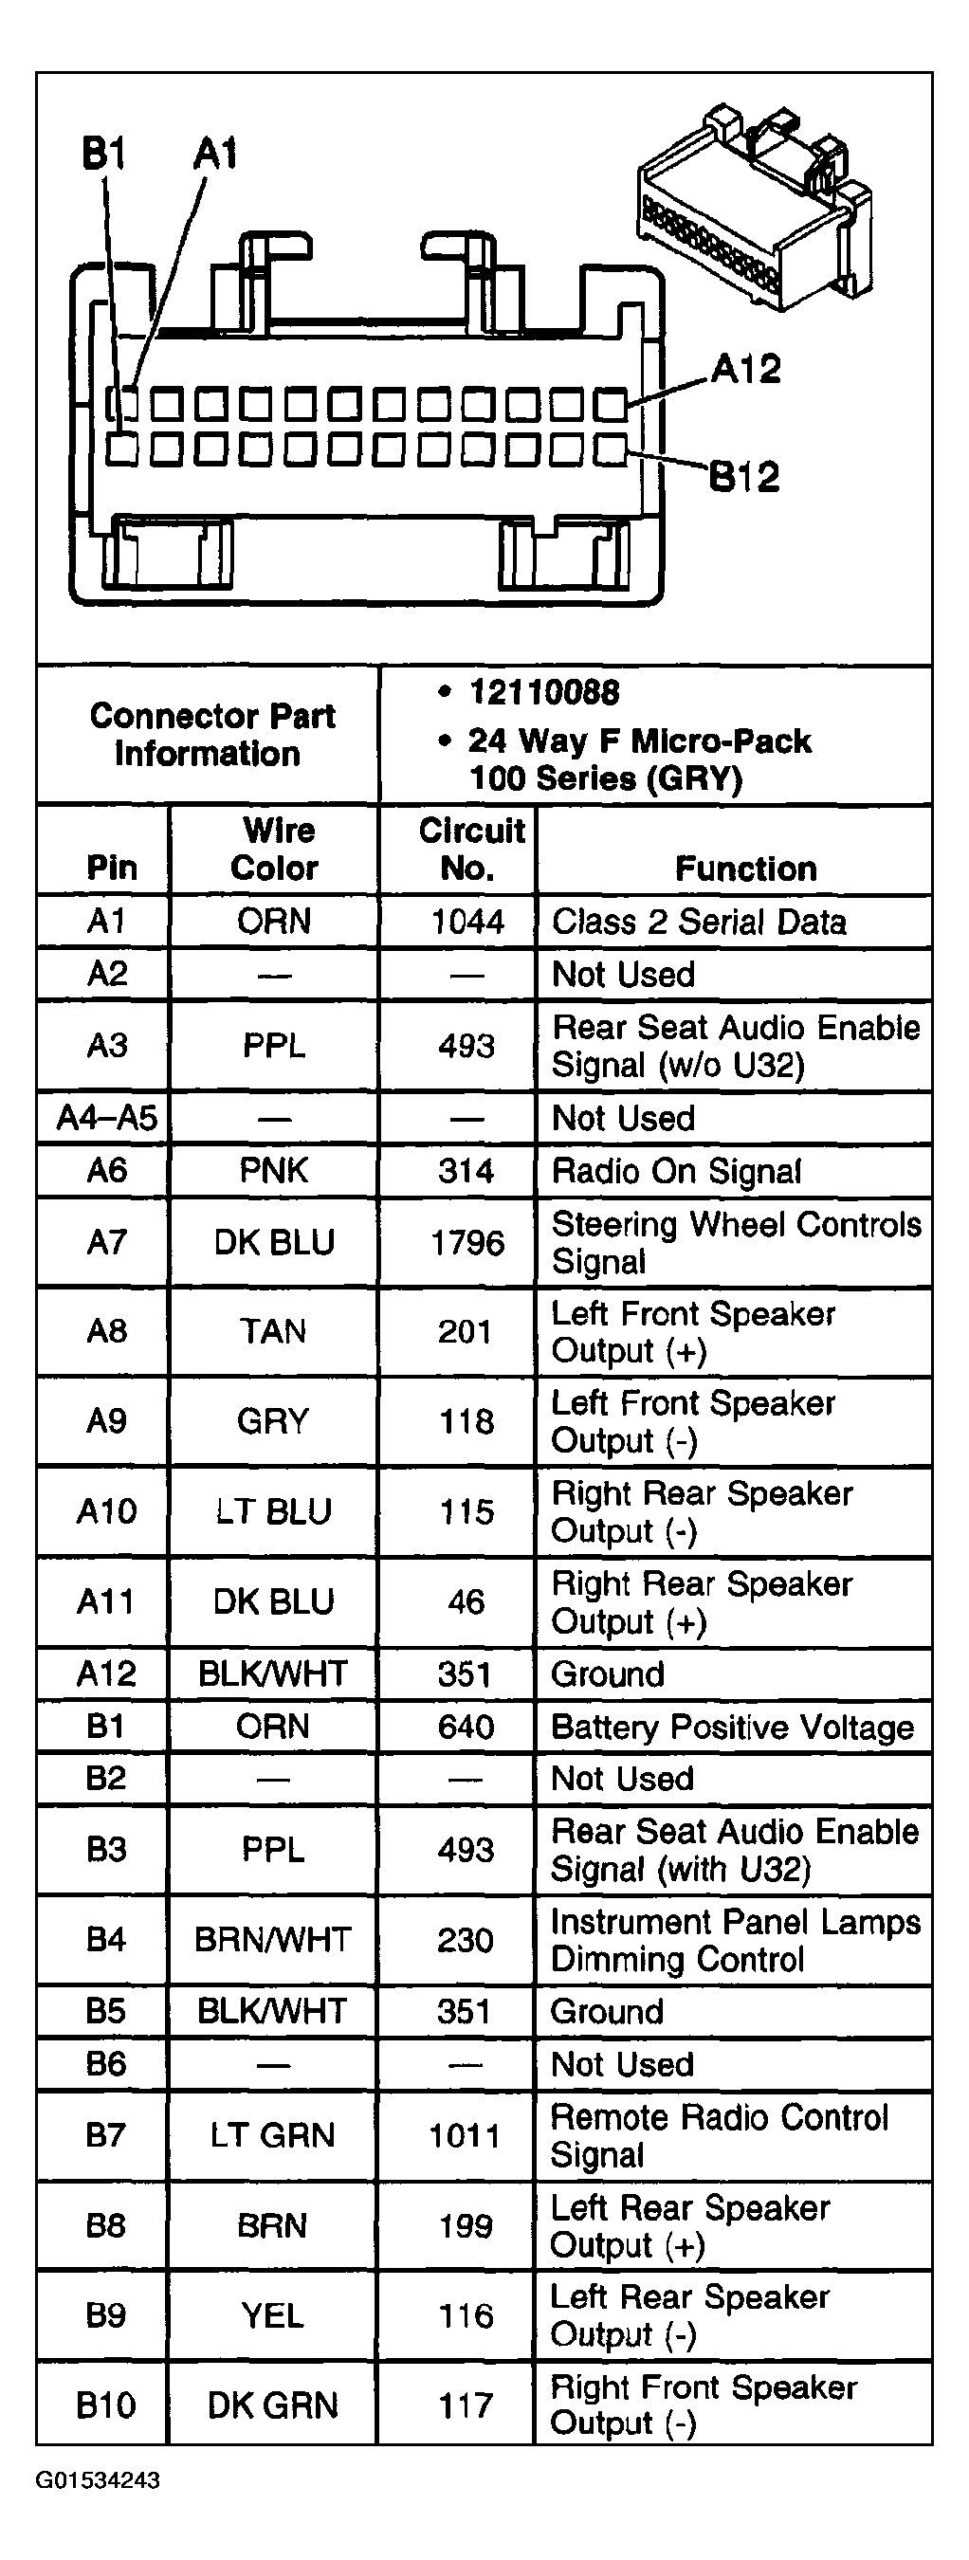 05 Trailblazer Radio Wire Diagrams In 2021 Chevy Trailblazer Radio